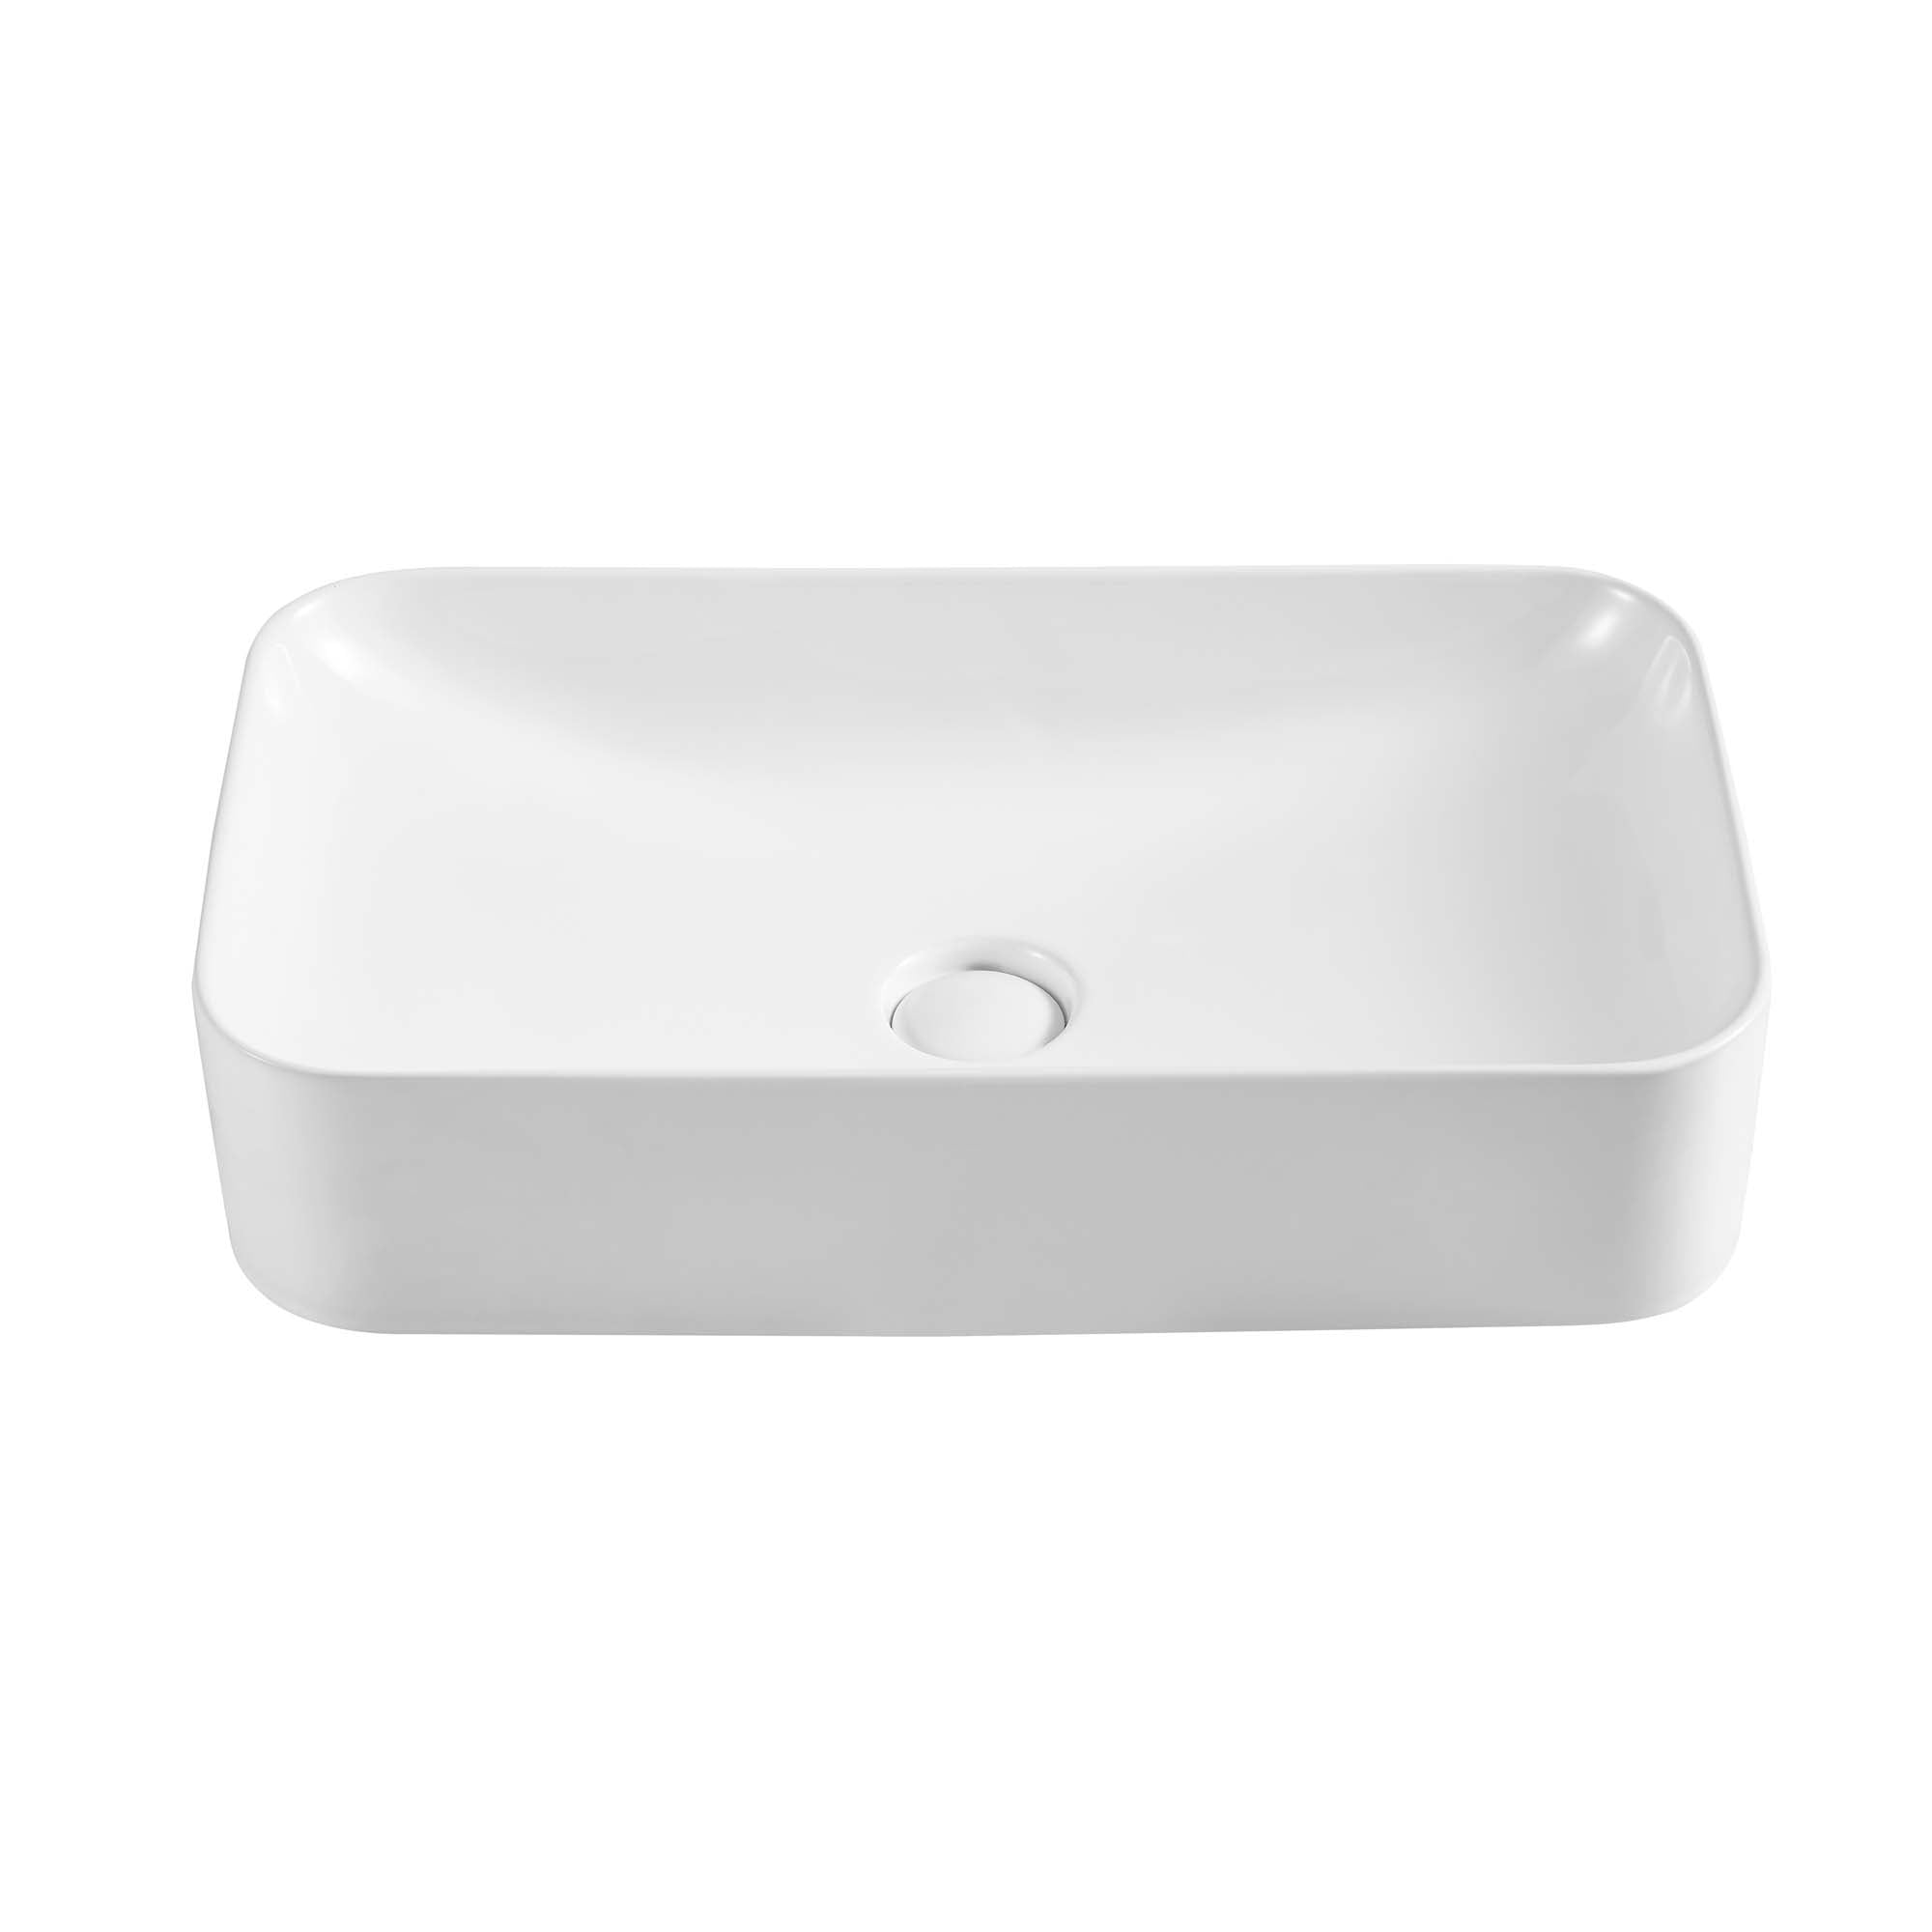 Bathroom Basin Sink Glass Ceramic Countertop Round Rectangle Cloakroom Wash Bowl 